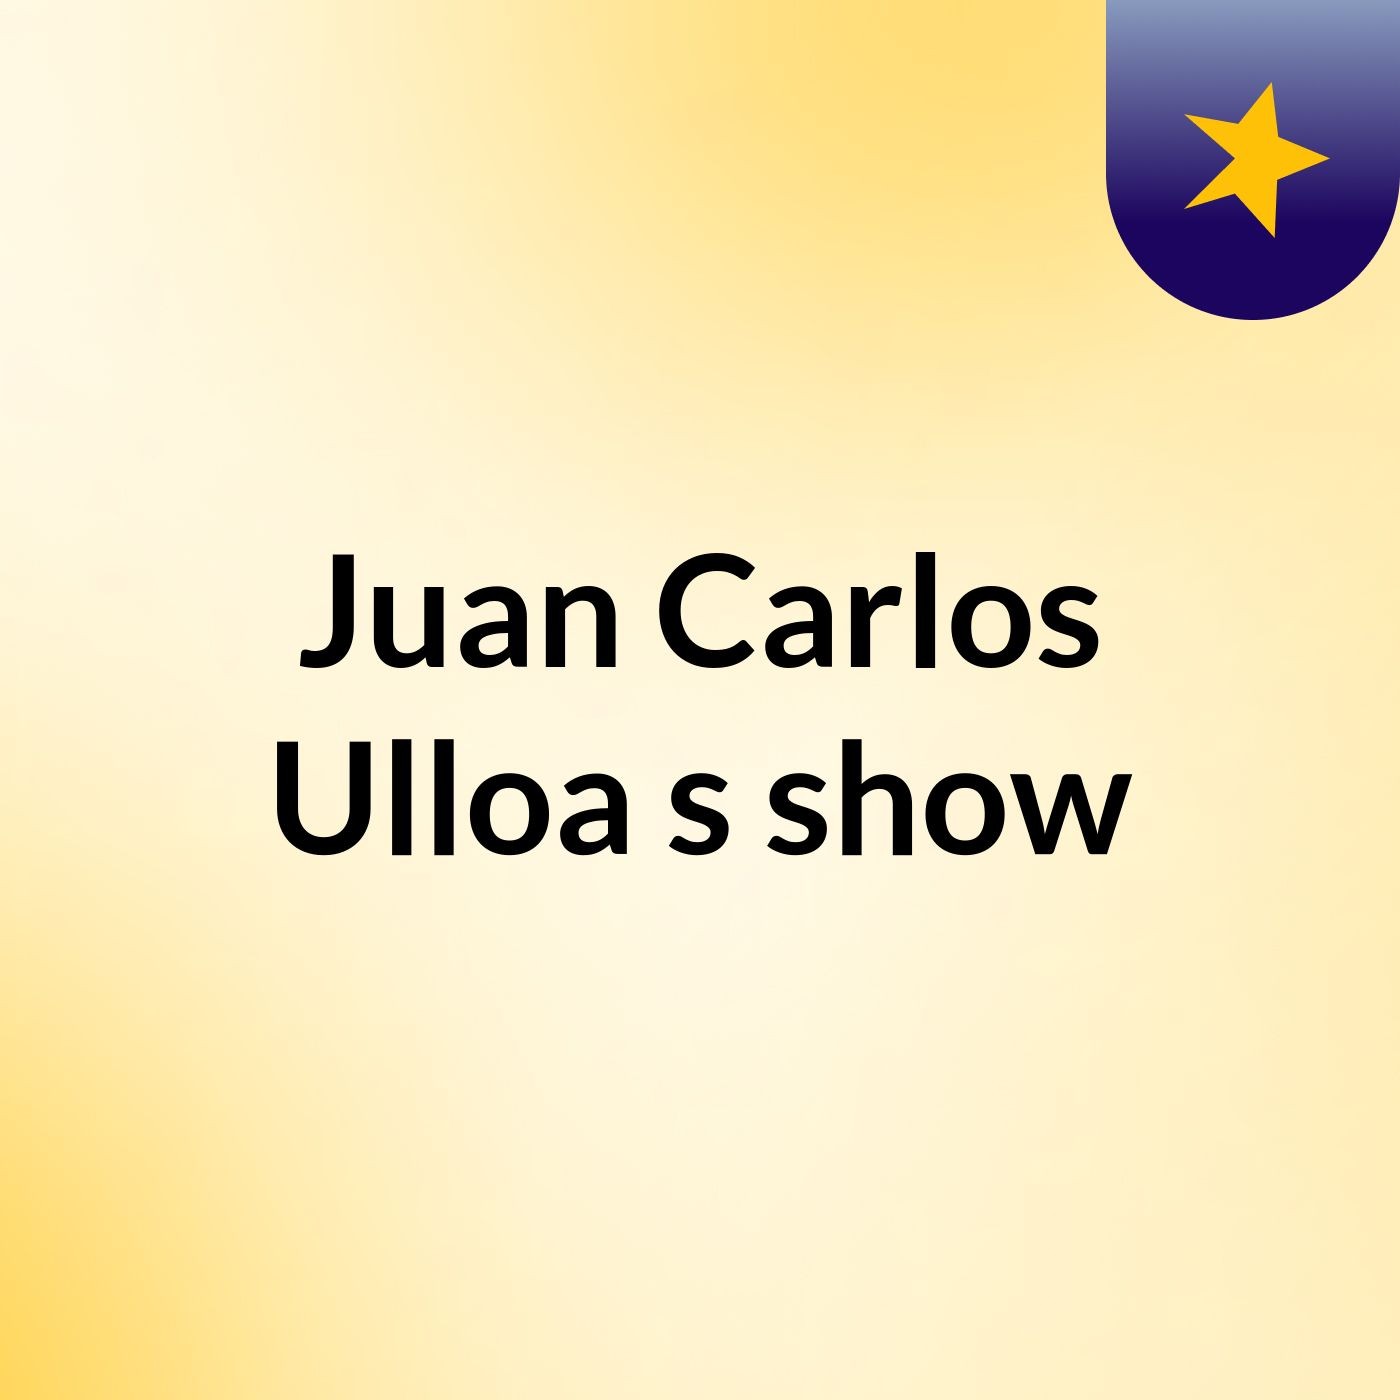 Juan Carlos Ulloa's show